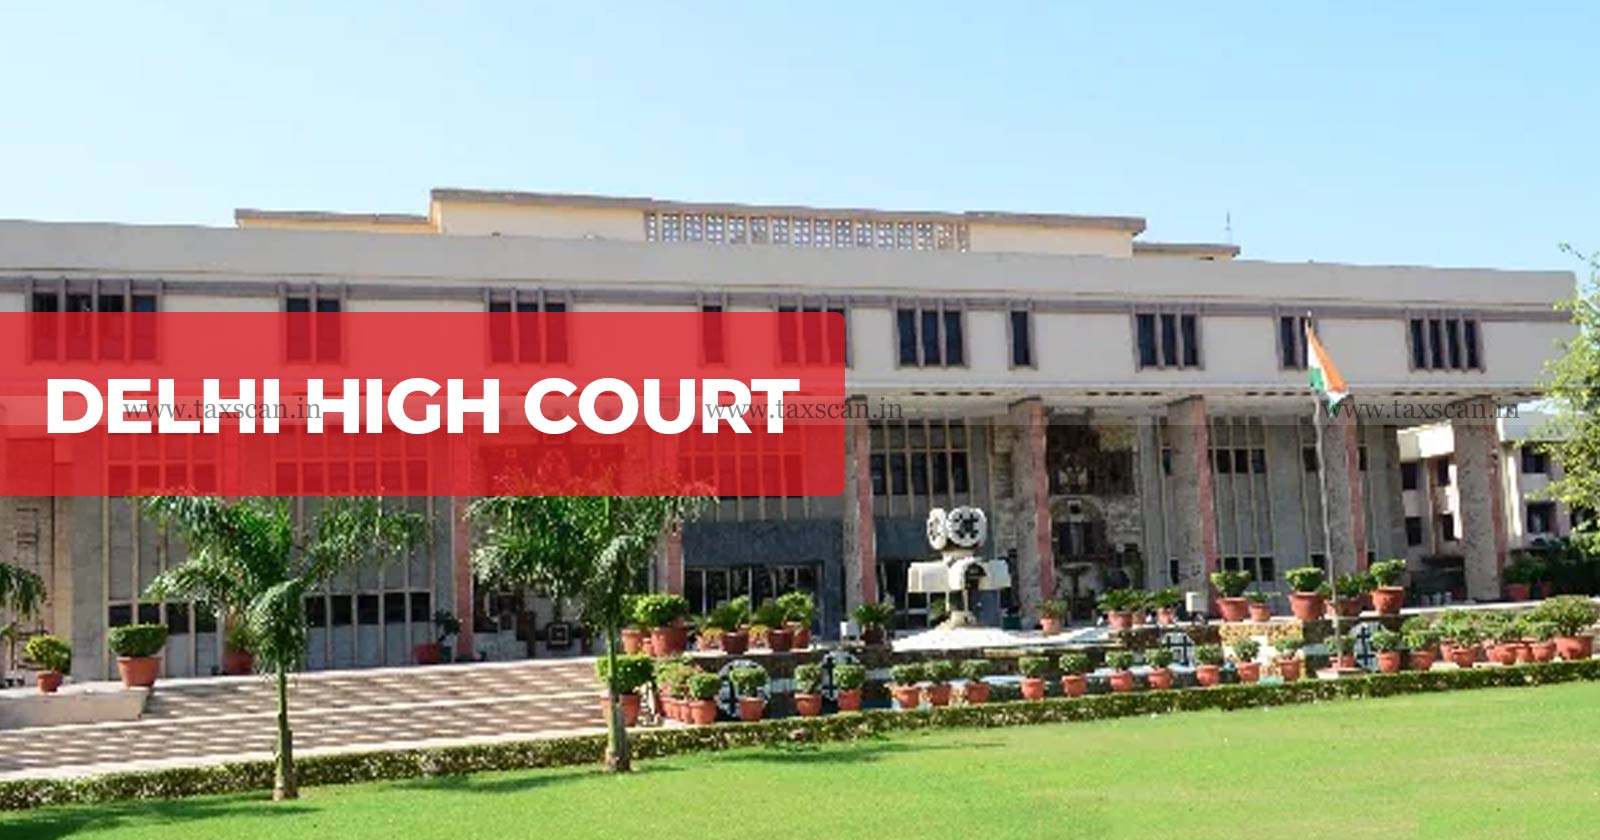 Delhi HC - Delhi high court - Delhi VAT Act - Delhi High Court refund order - Delhi VAT Act refund process - Delhi High Court ruling on VAT claims - taxscan